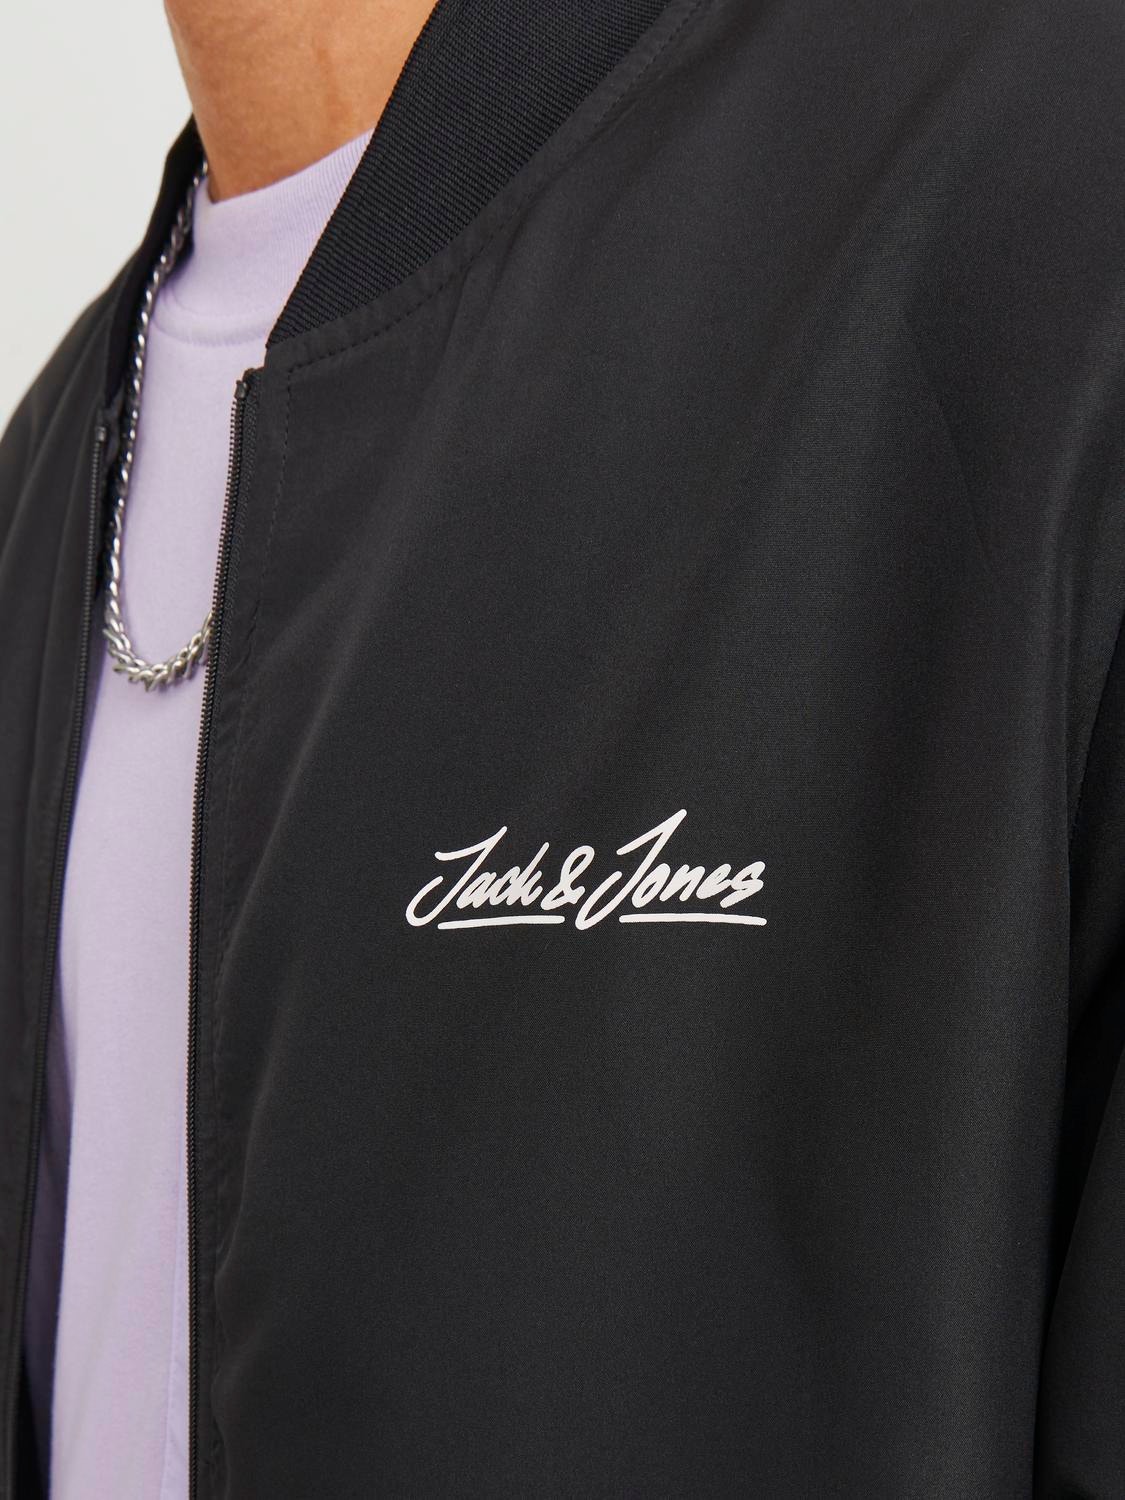 Jack & Jones Bomber jacket -Black - 12249372